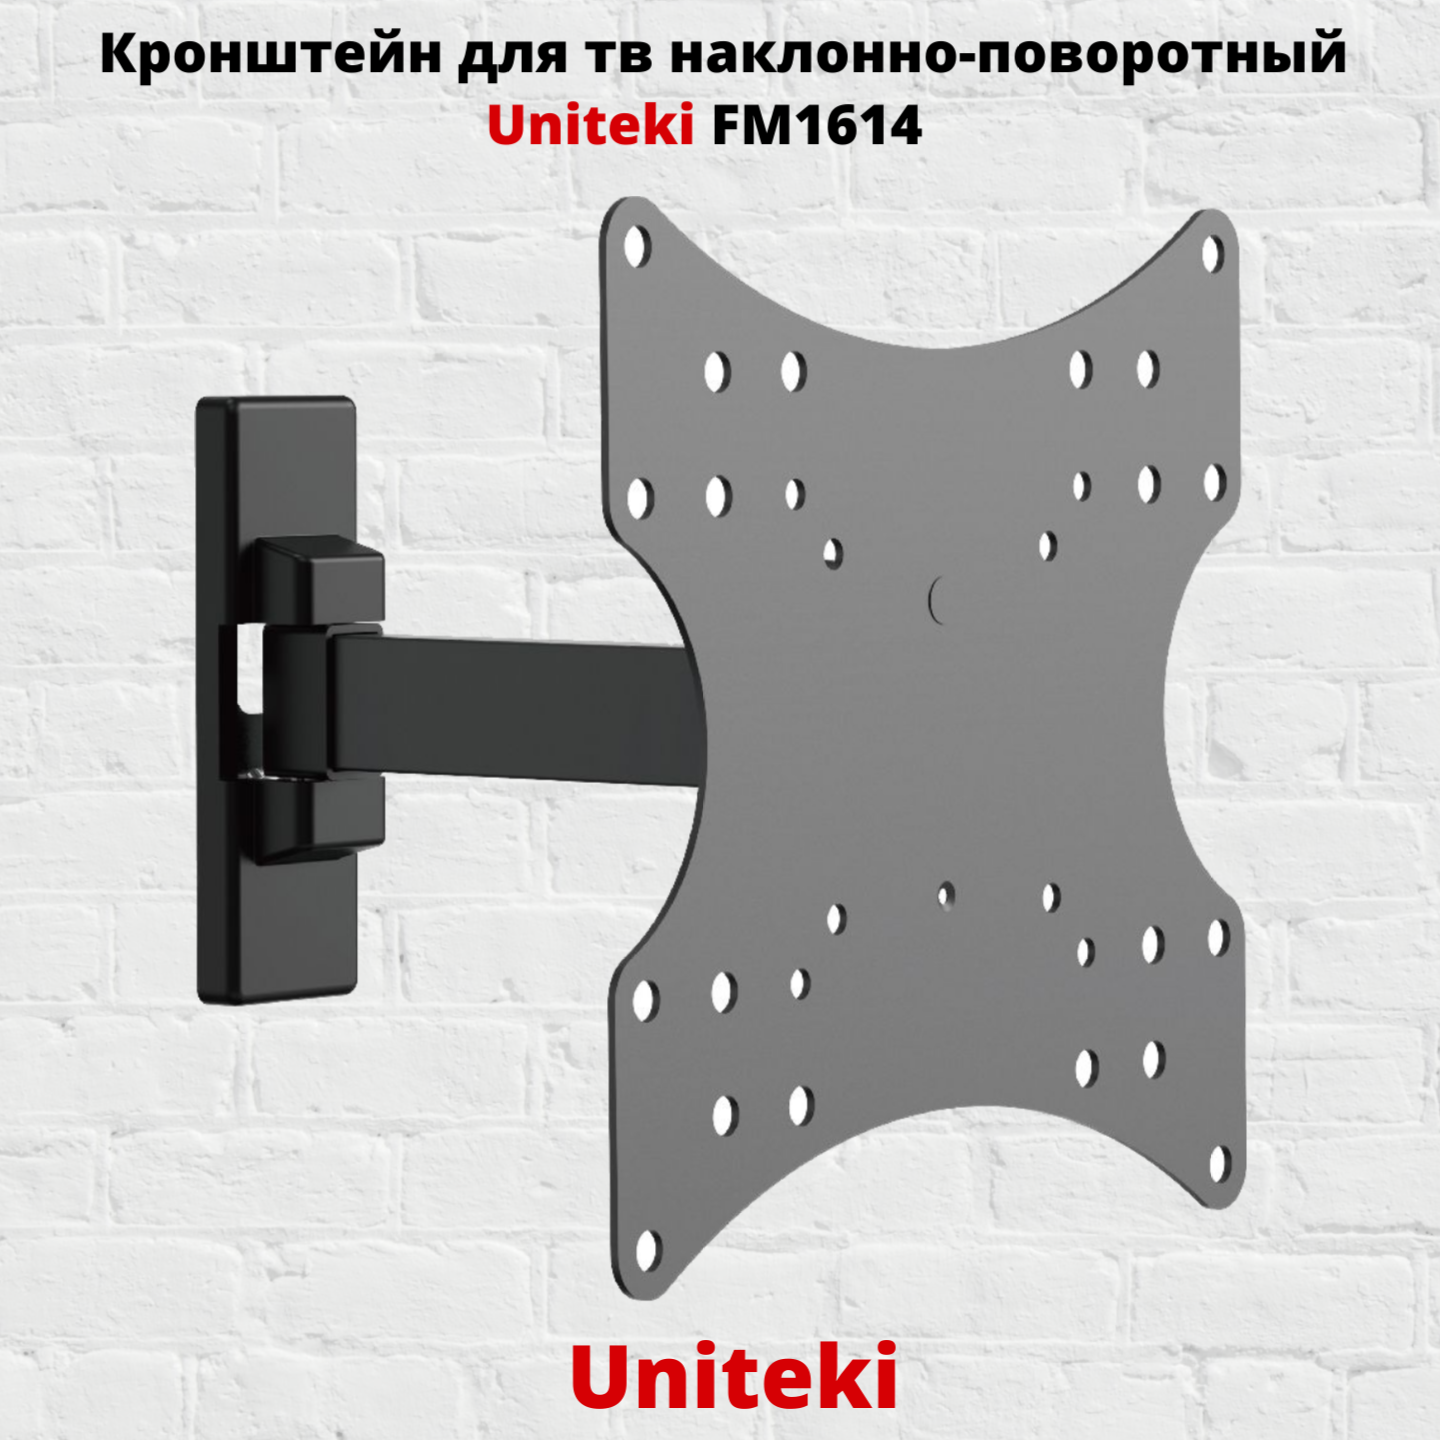 Наклонно-поворотный кронштейн для телевизора Uniteki FM1614 23-42 черный